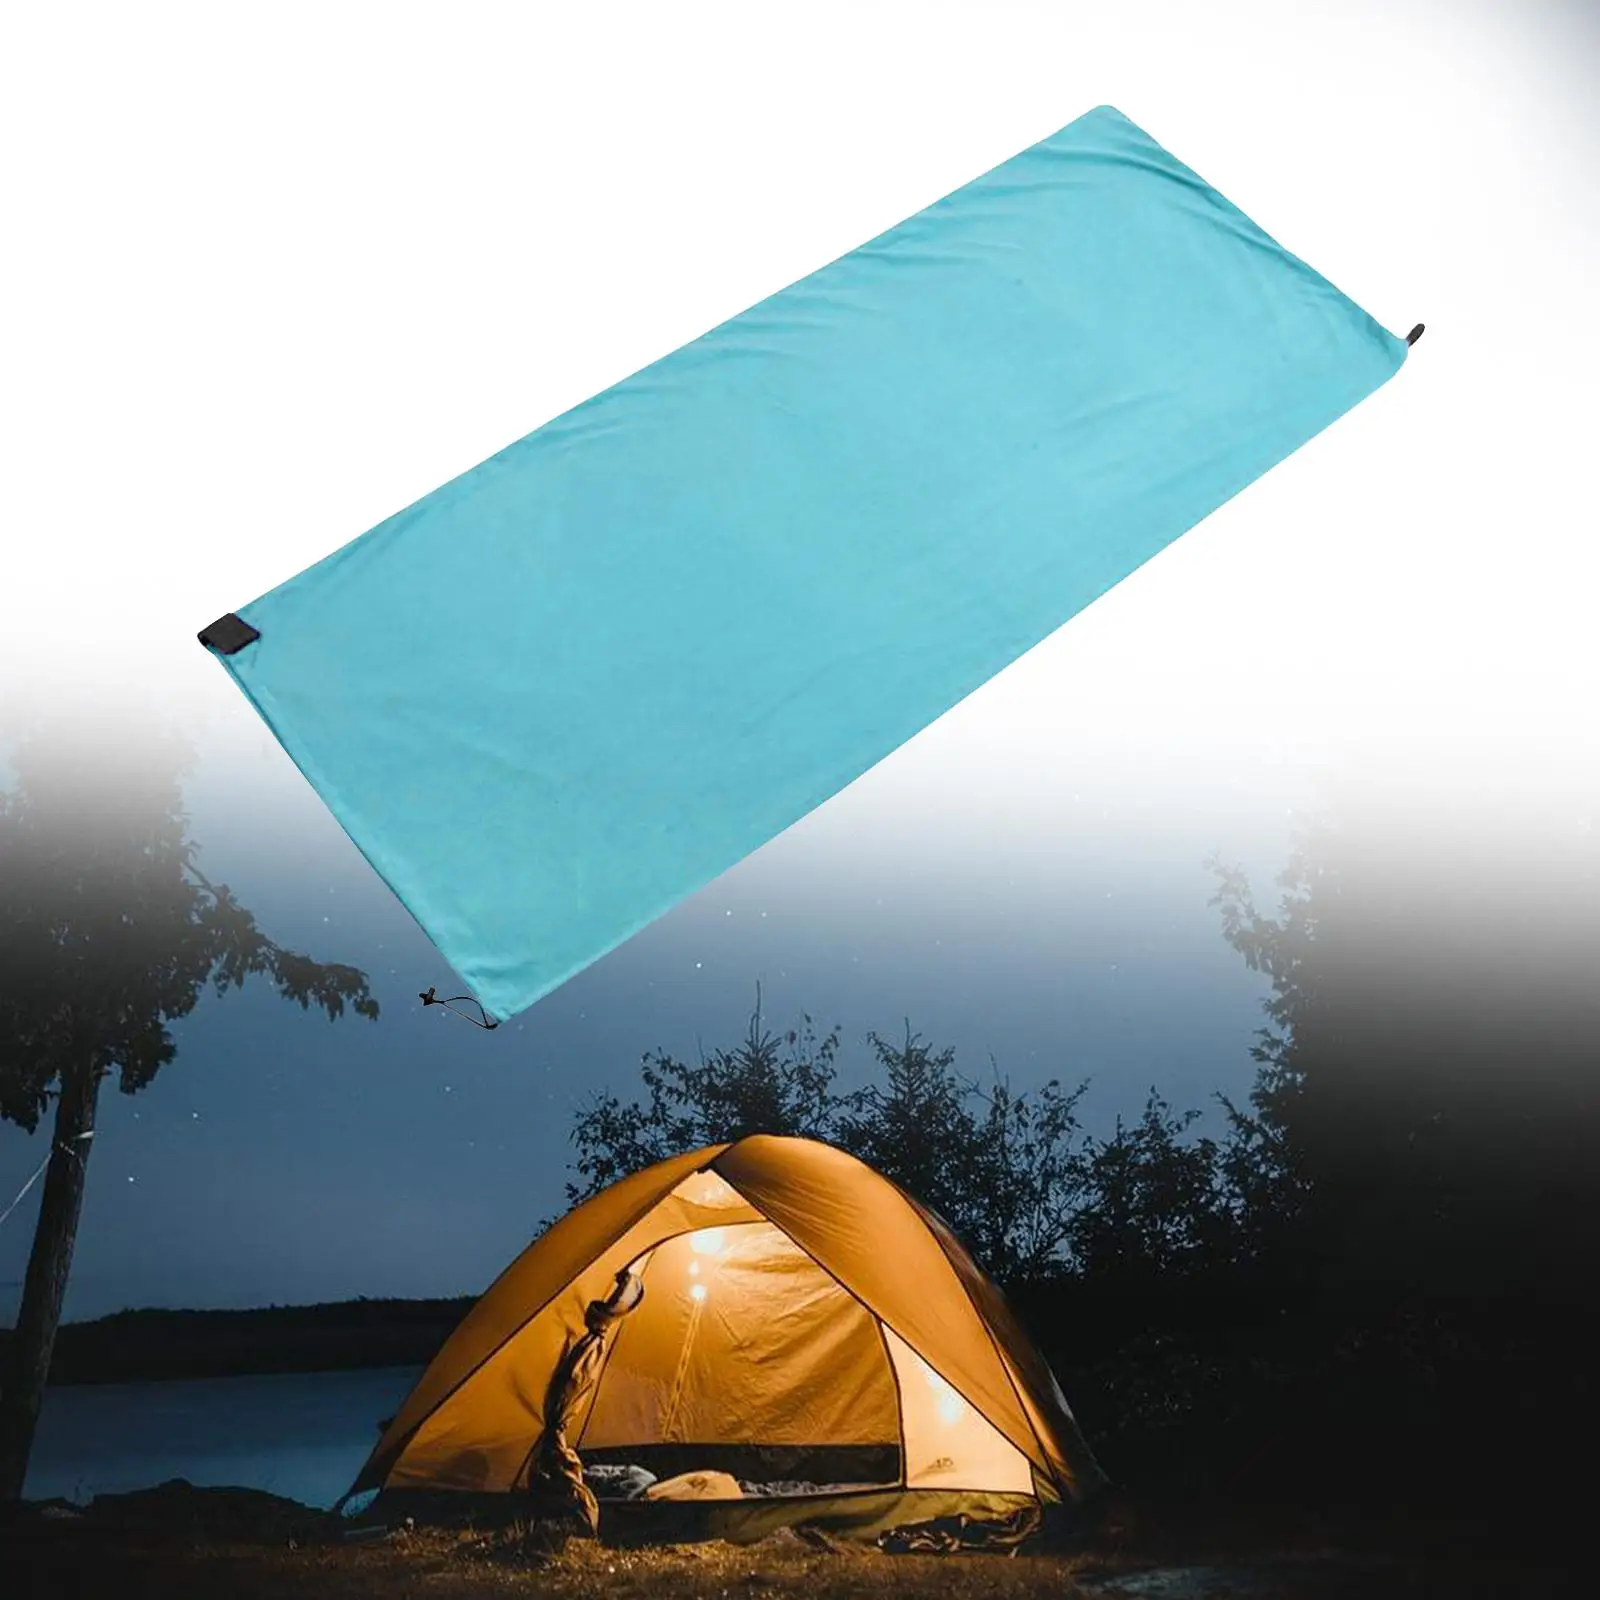 Sleeping Bag Liner Sleep Sheet Backpacking Blanket Unfold Size 71x31.5inch